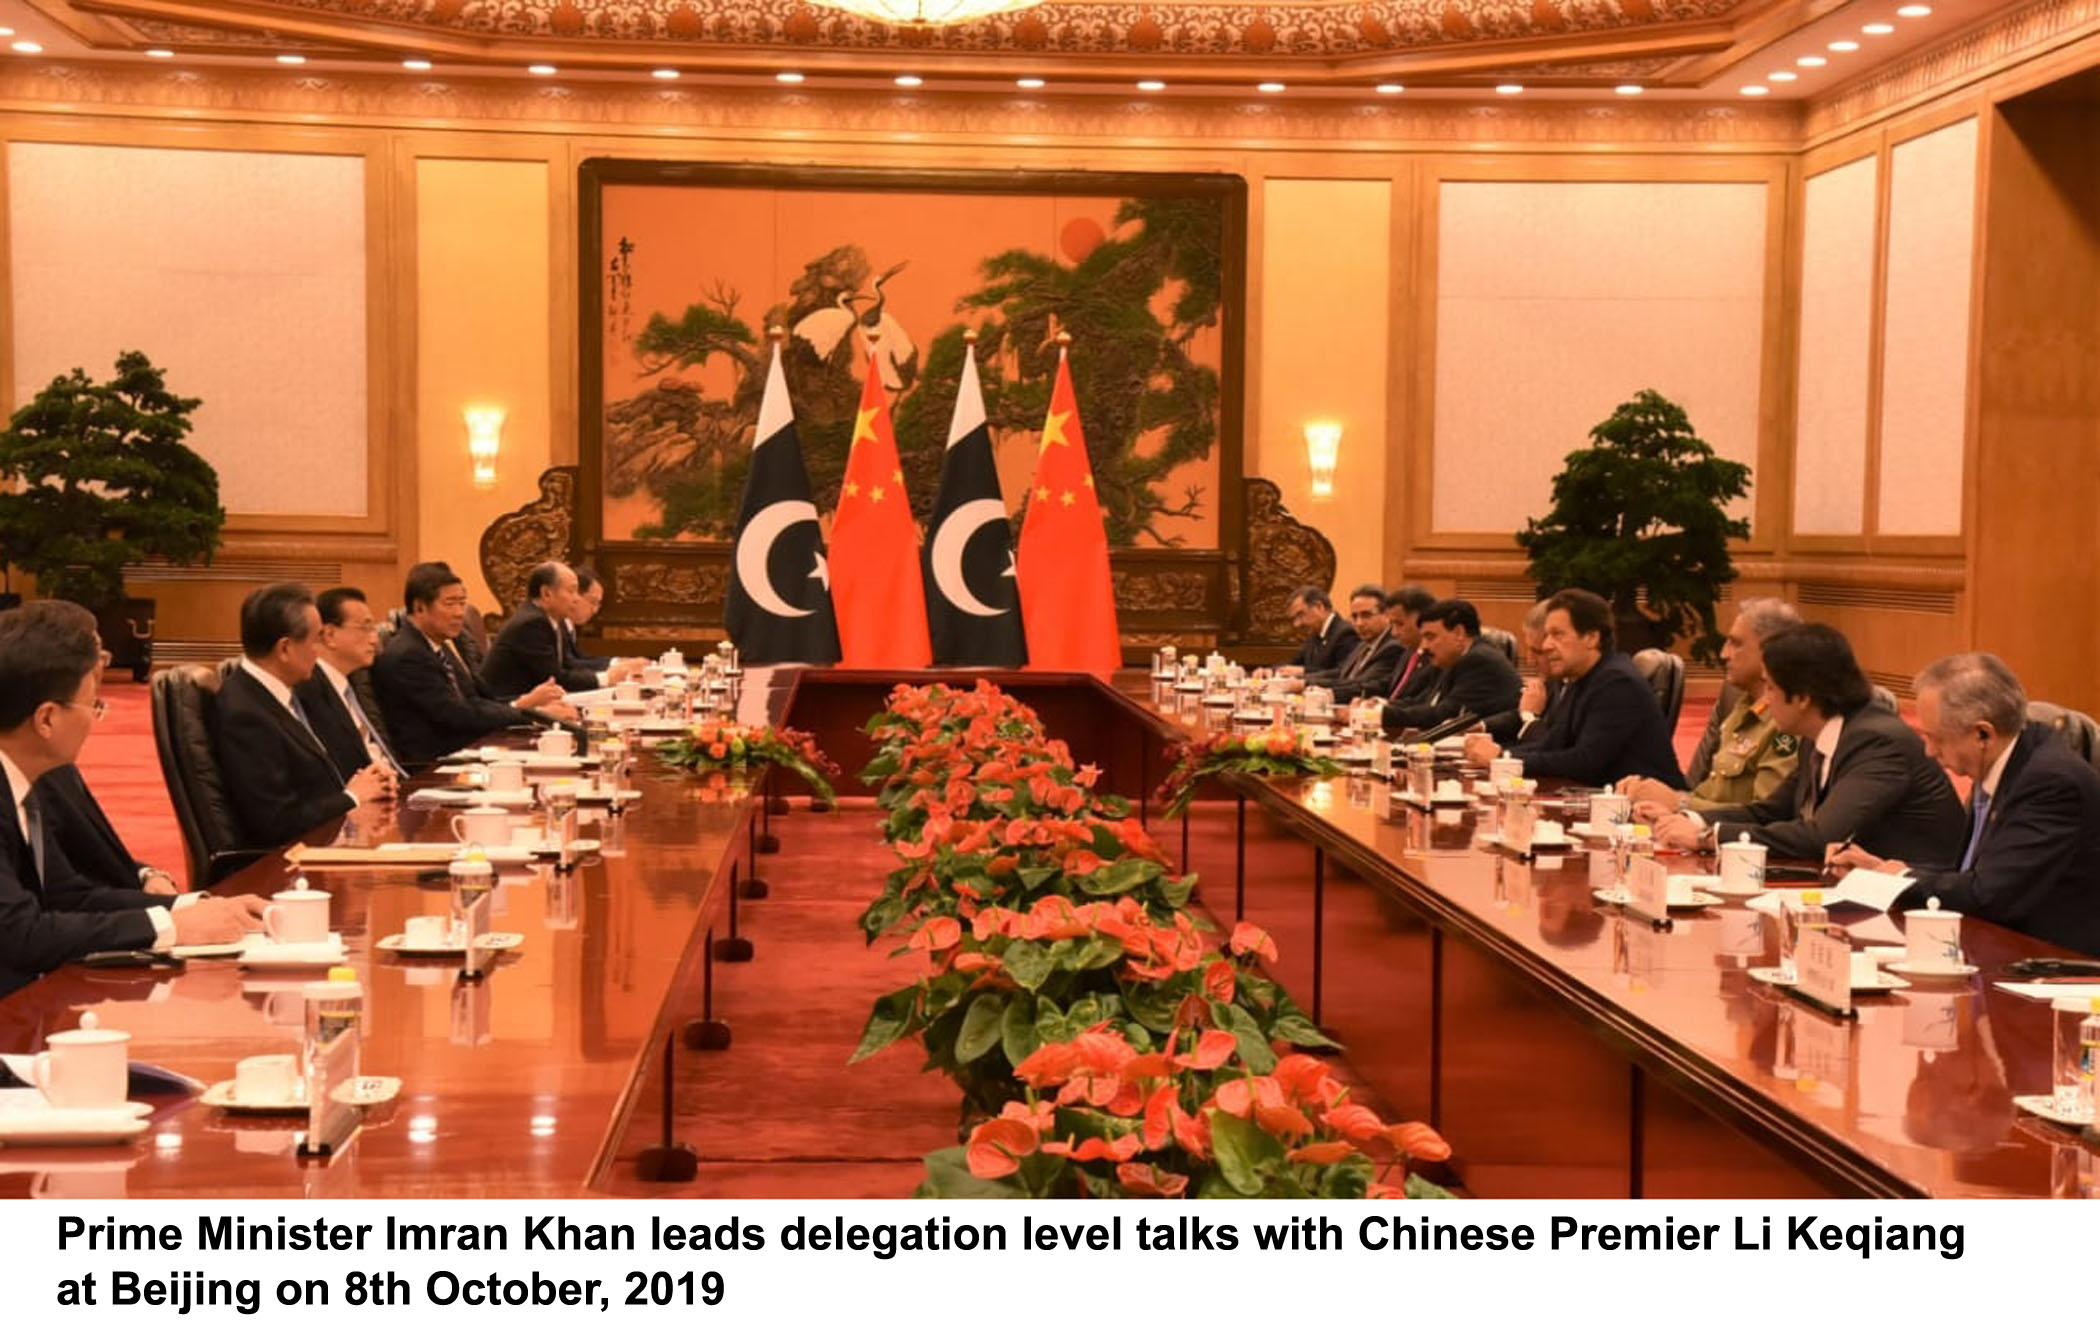 Prime Minister Imran Khan visit to China October 2019